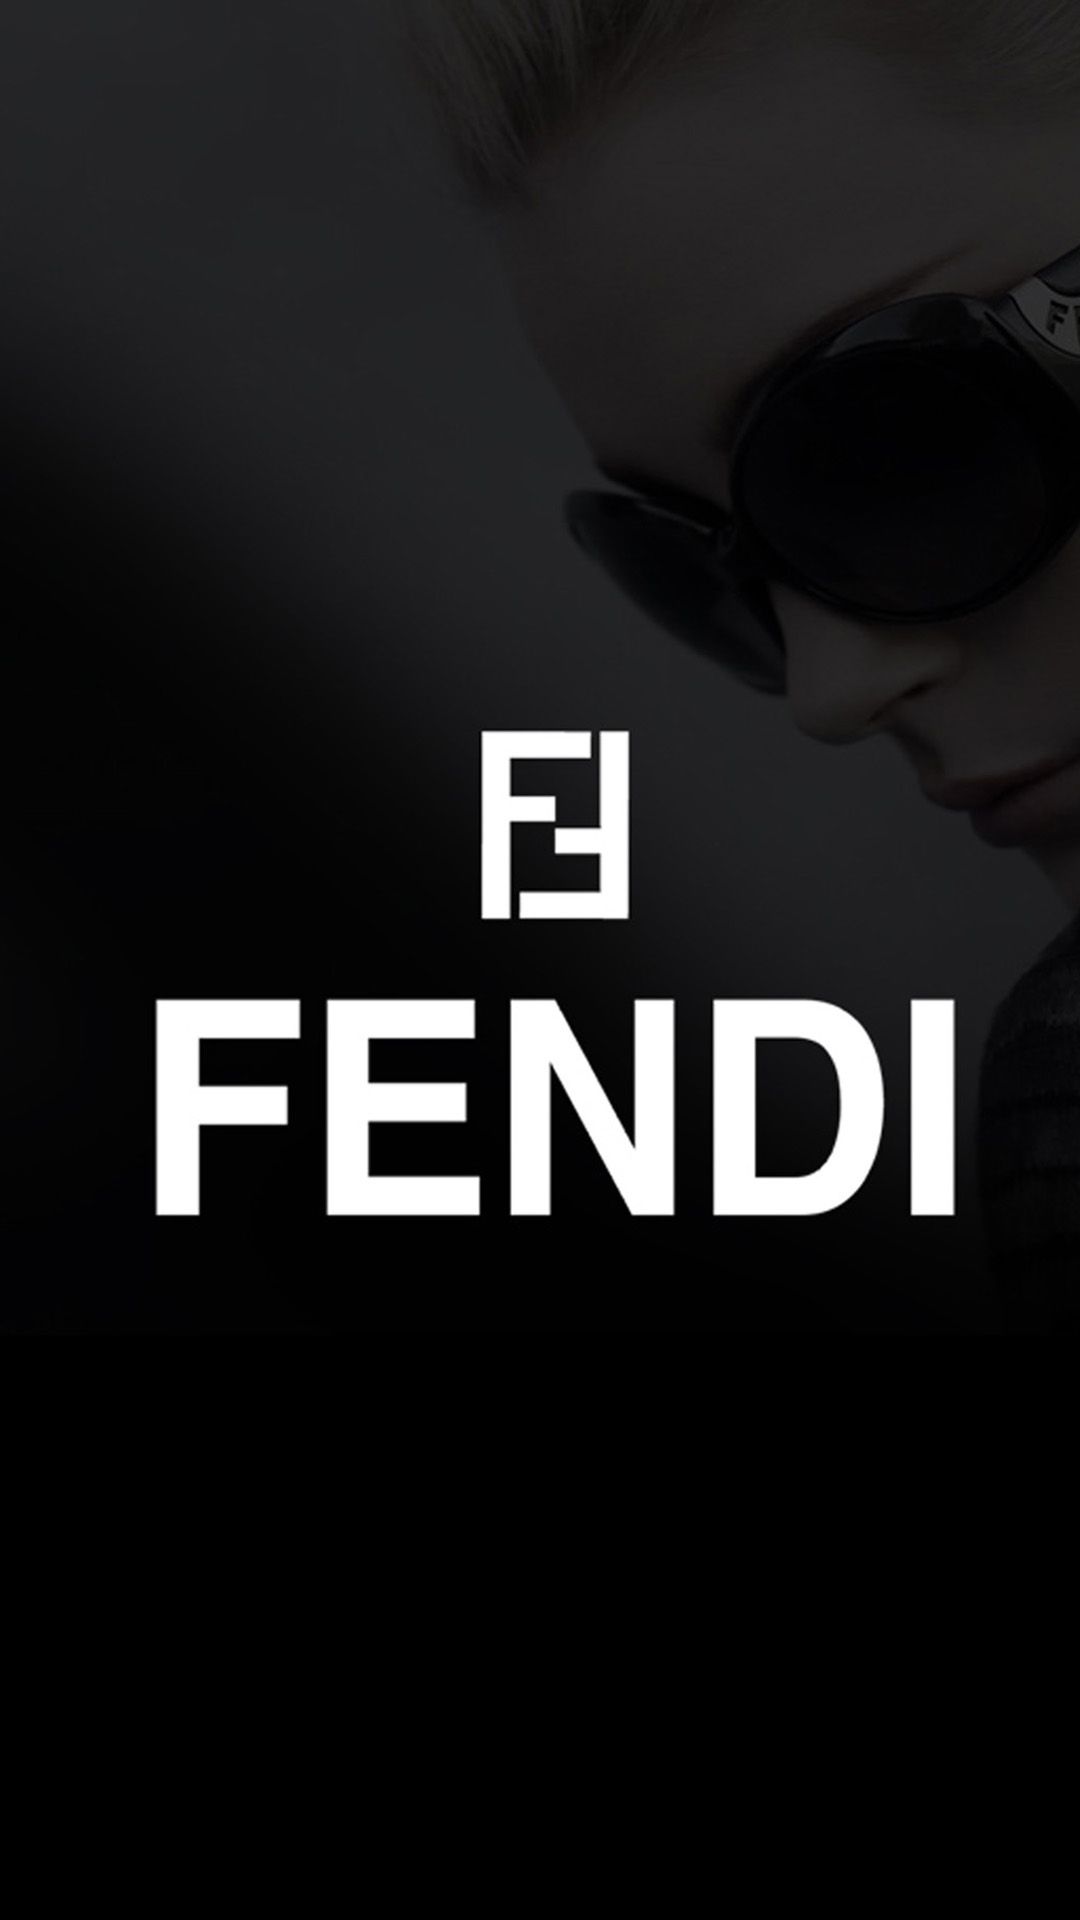 Fendi Wallpaper Free Fendi Background